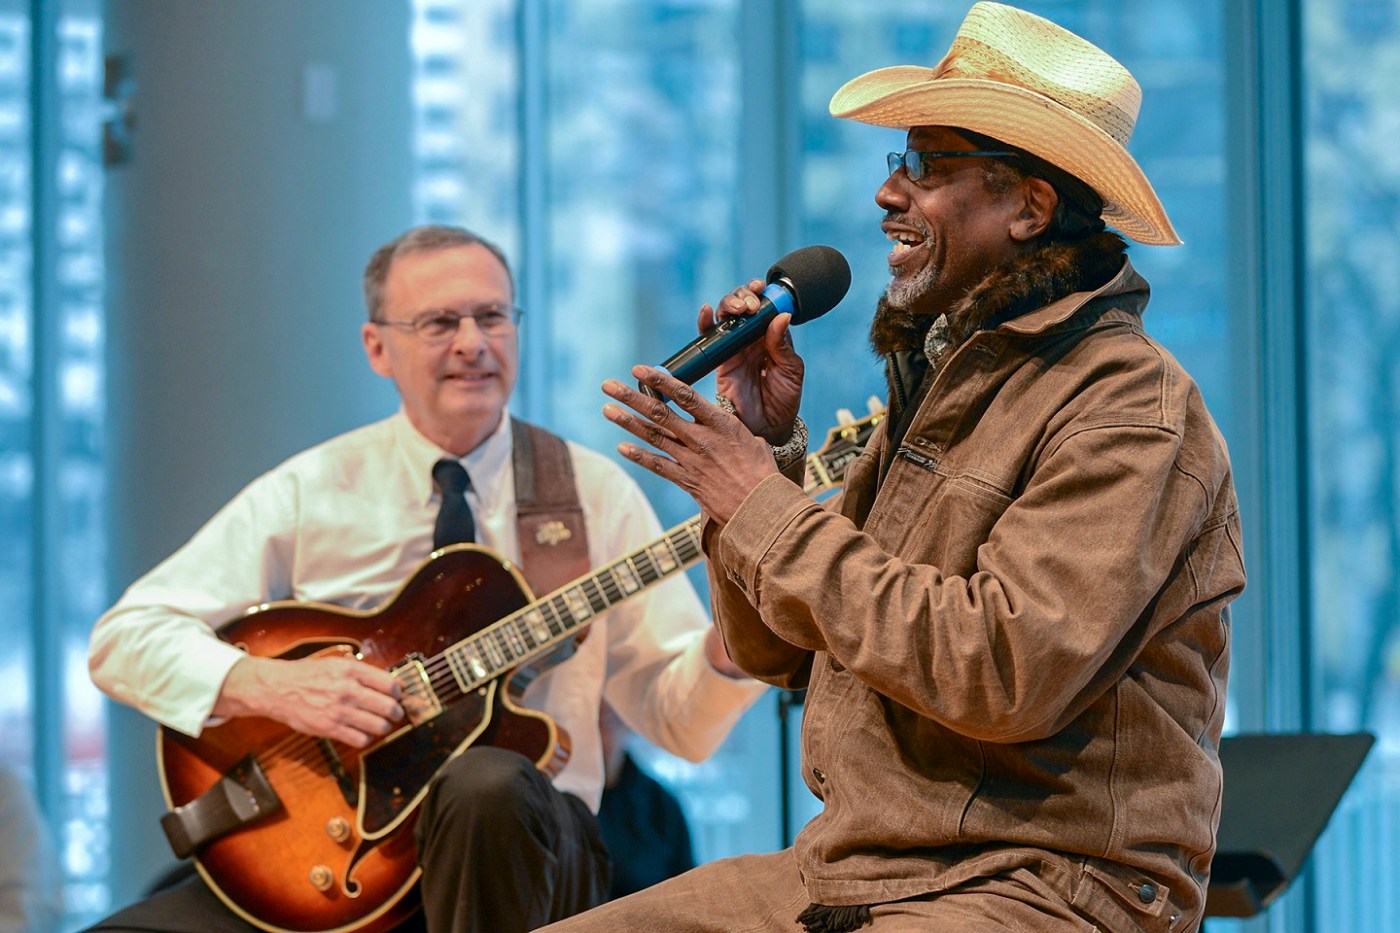 A Veteran sings during a Creative Arts concert